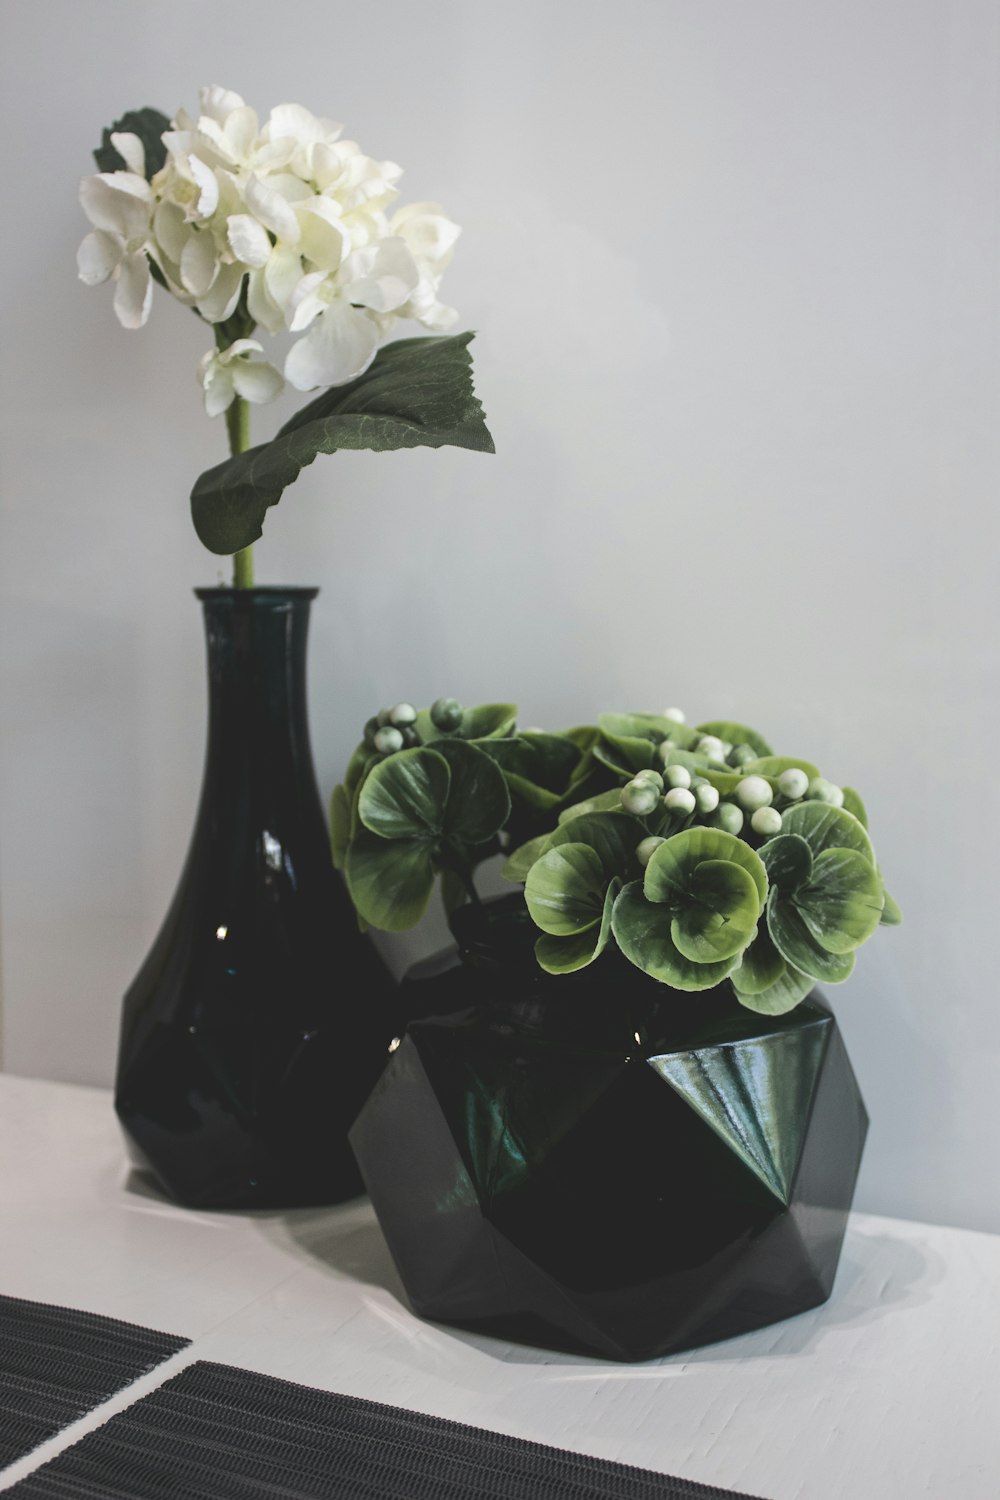 green leaf plants on green pot near white hydrangea flowers on green ceramic vase